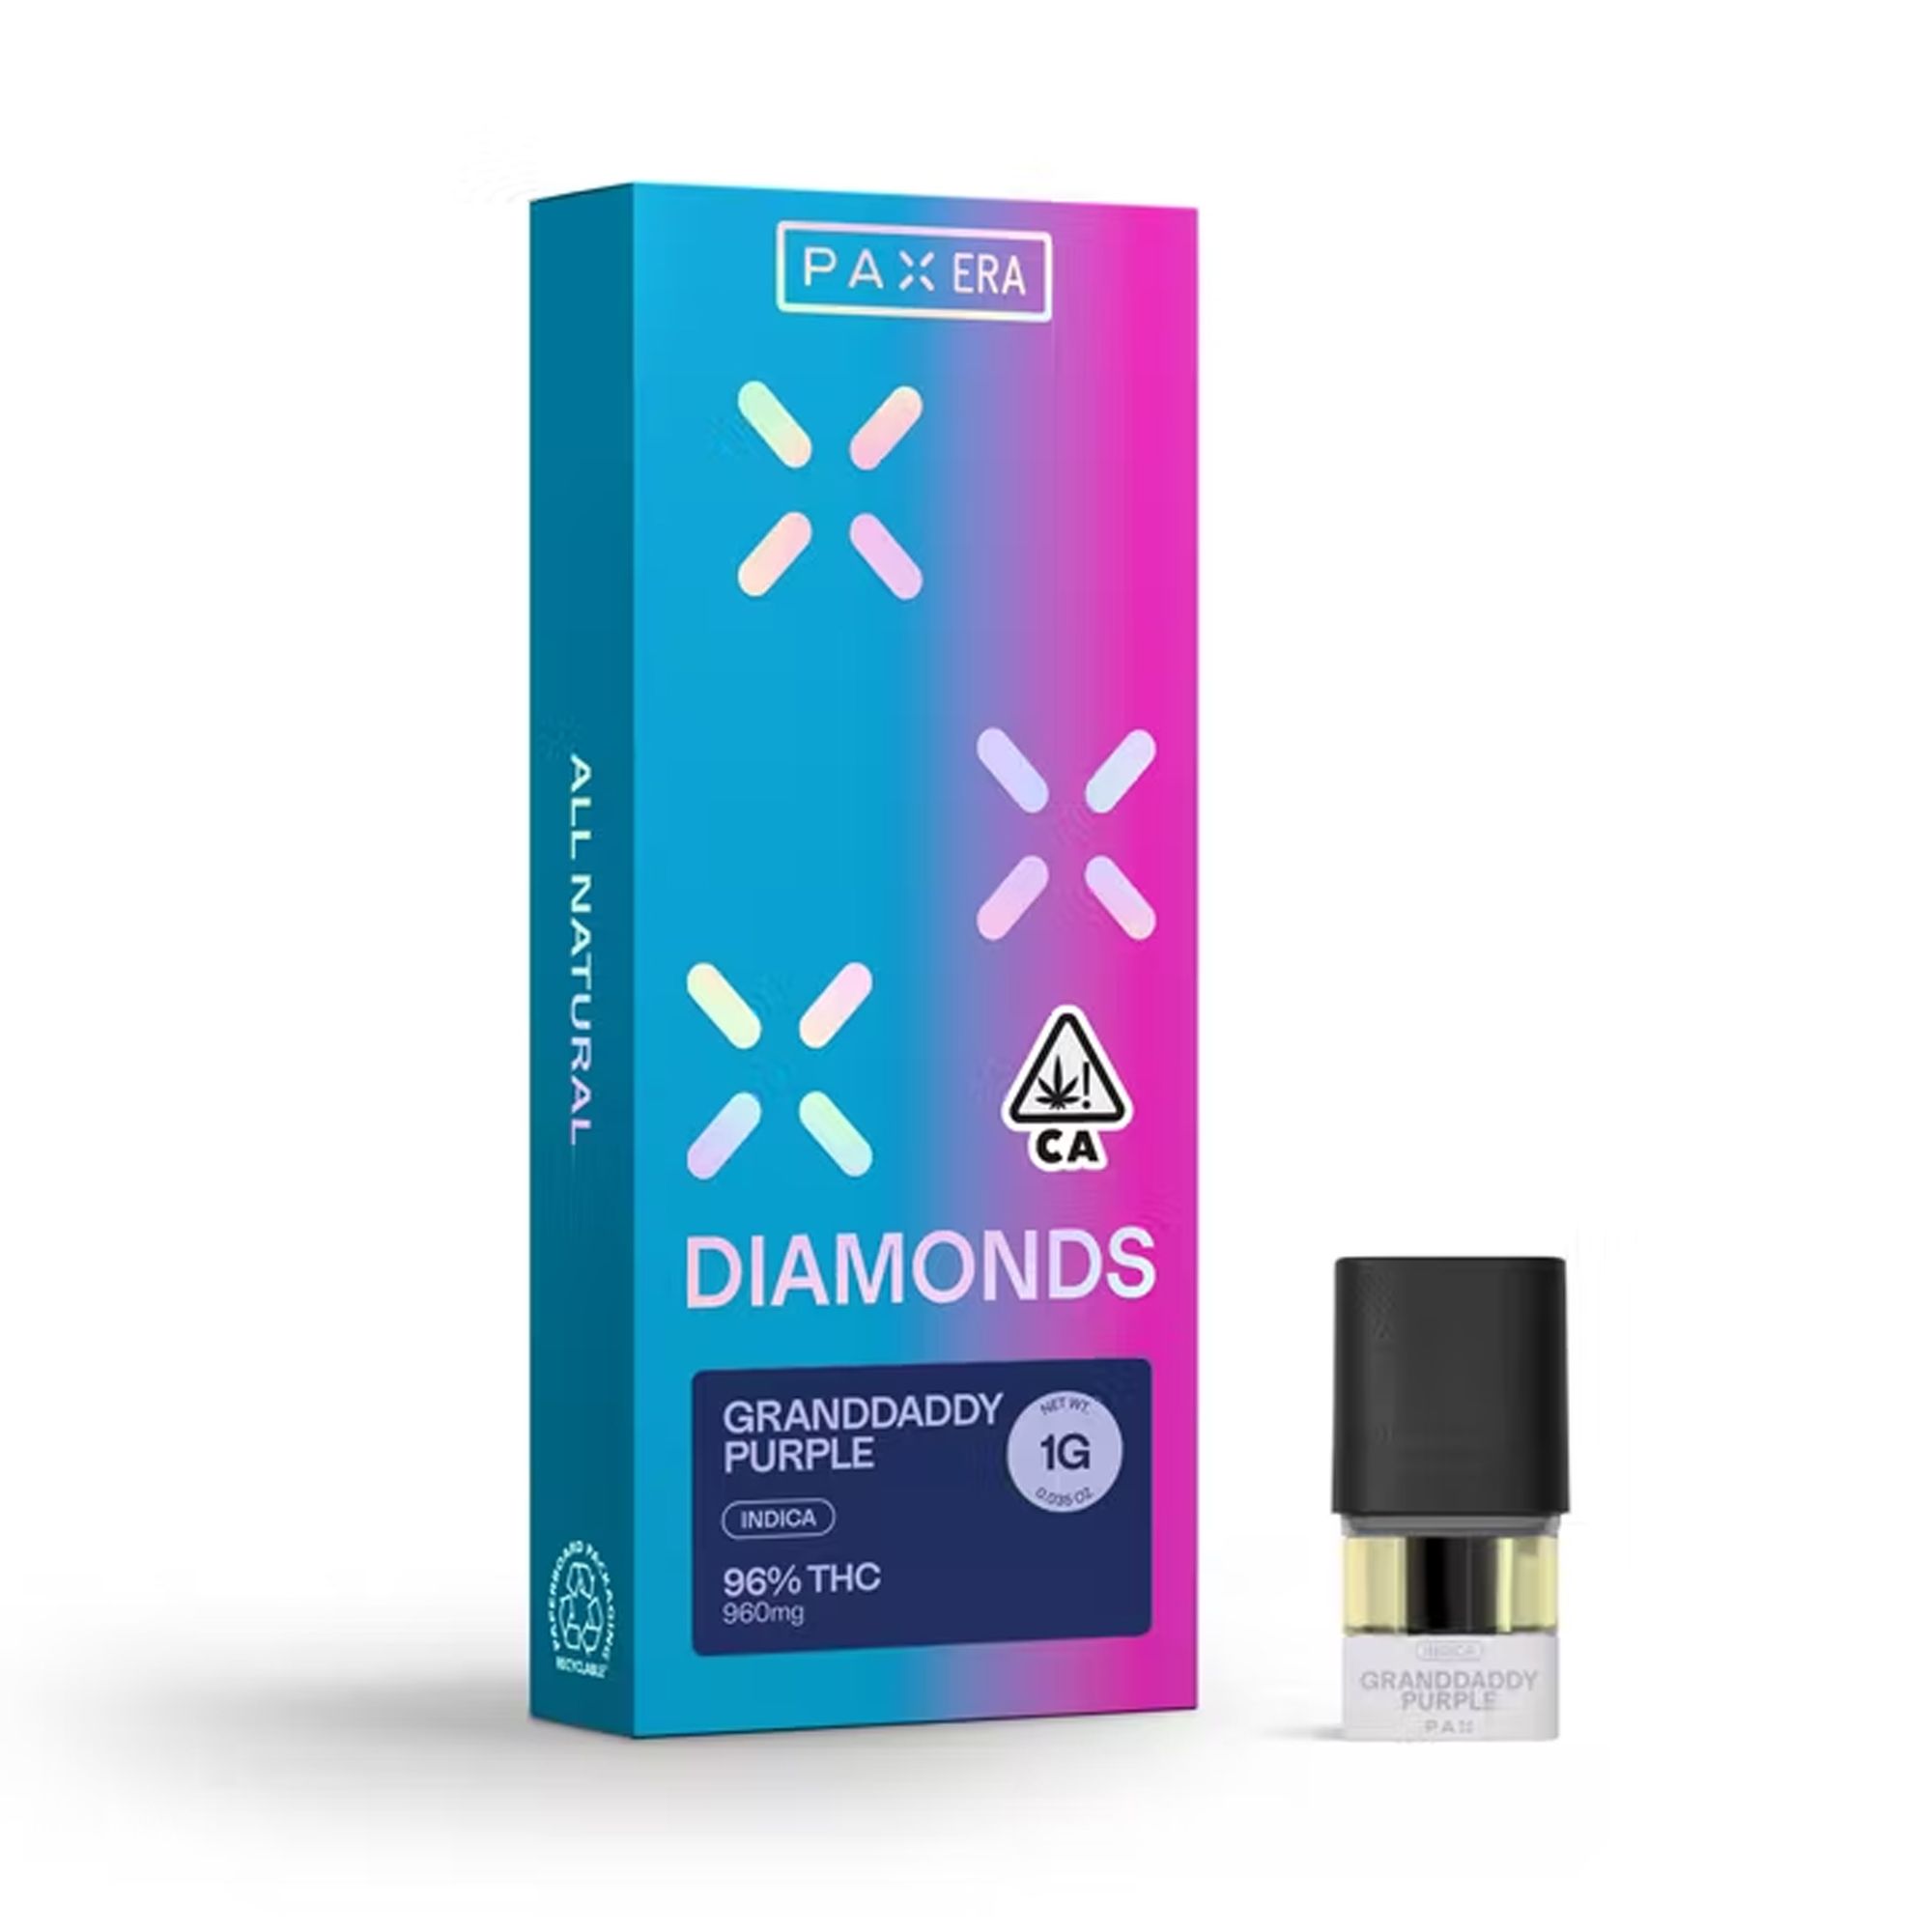 PAX Diamonds – Granddaddy Purple